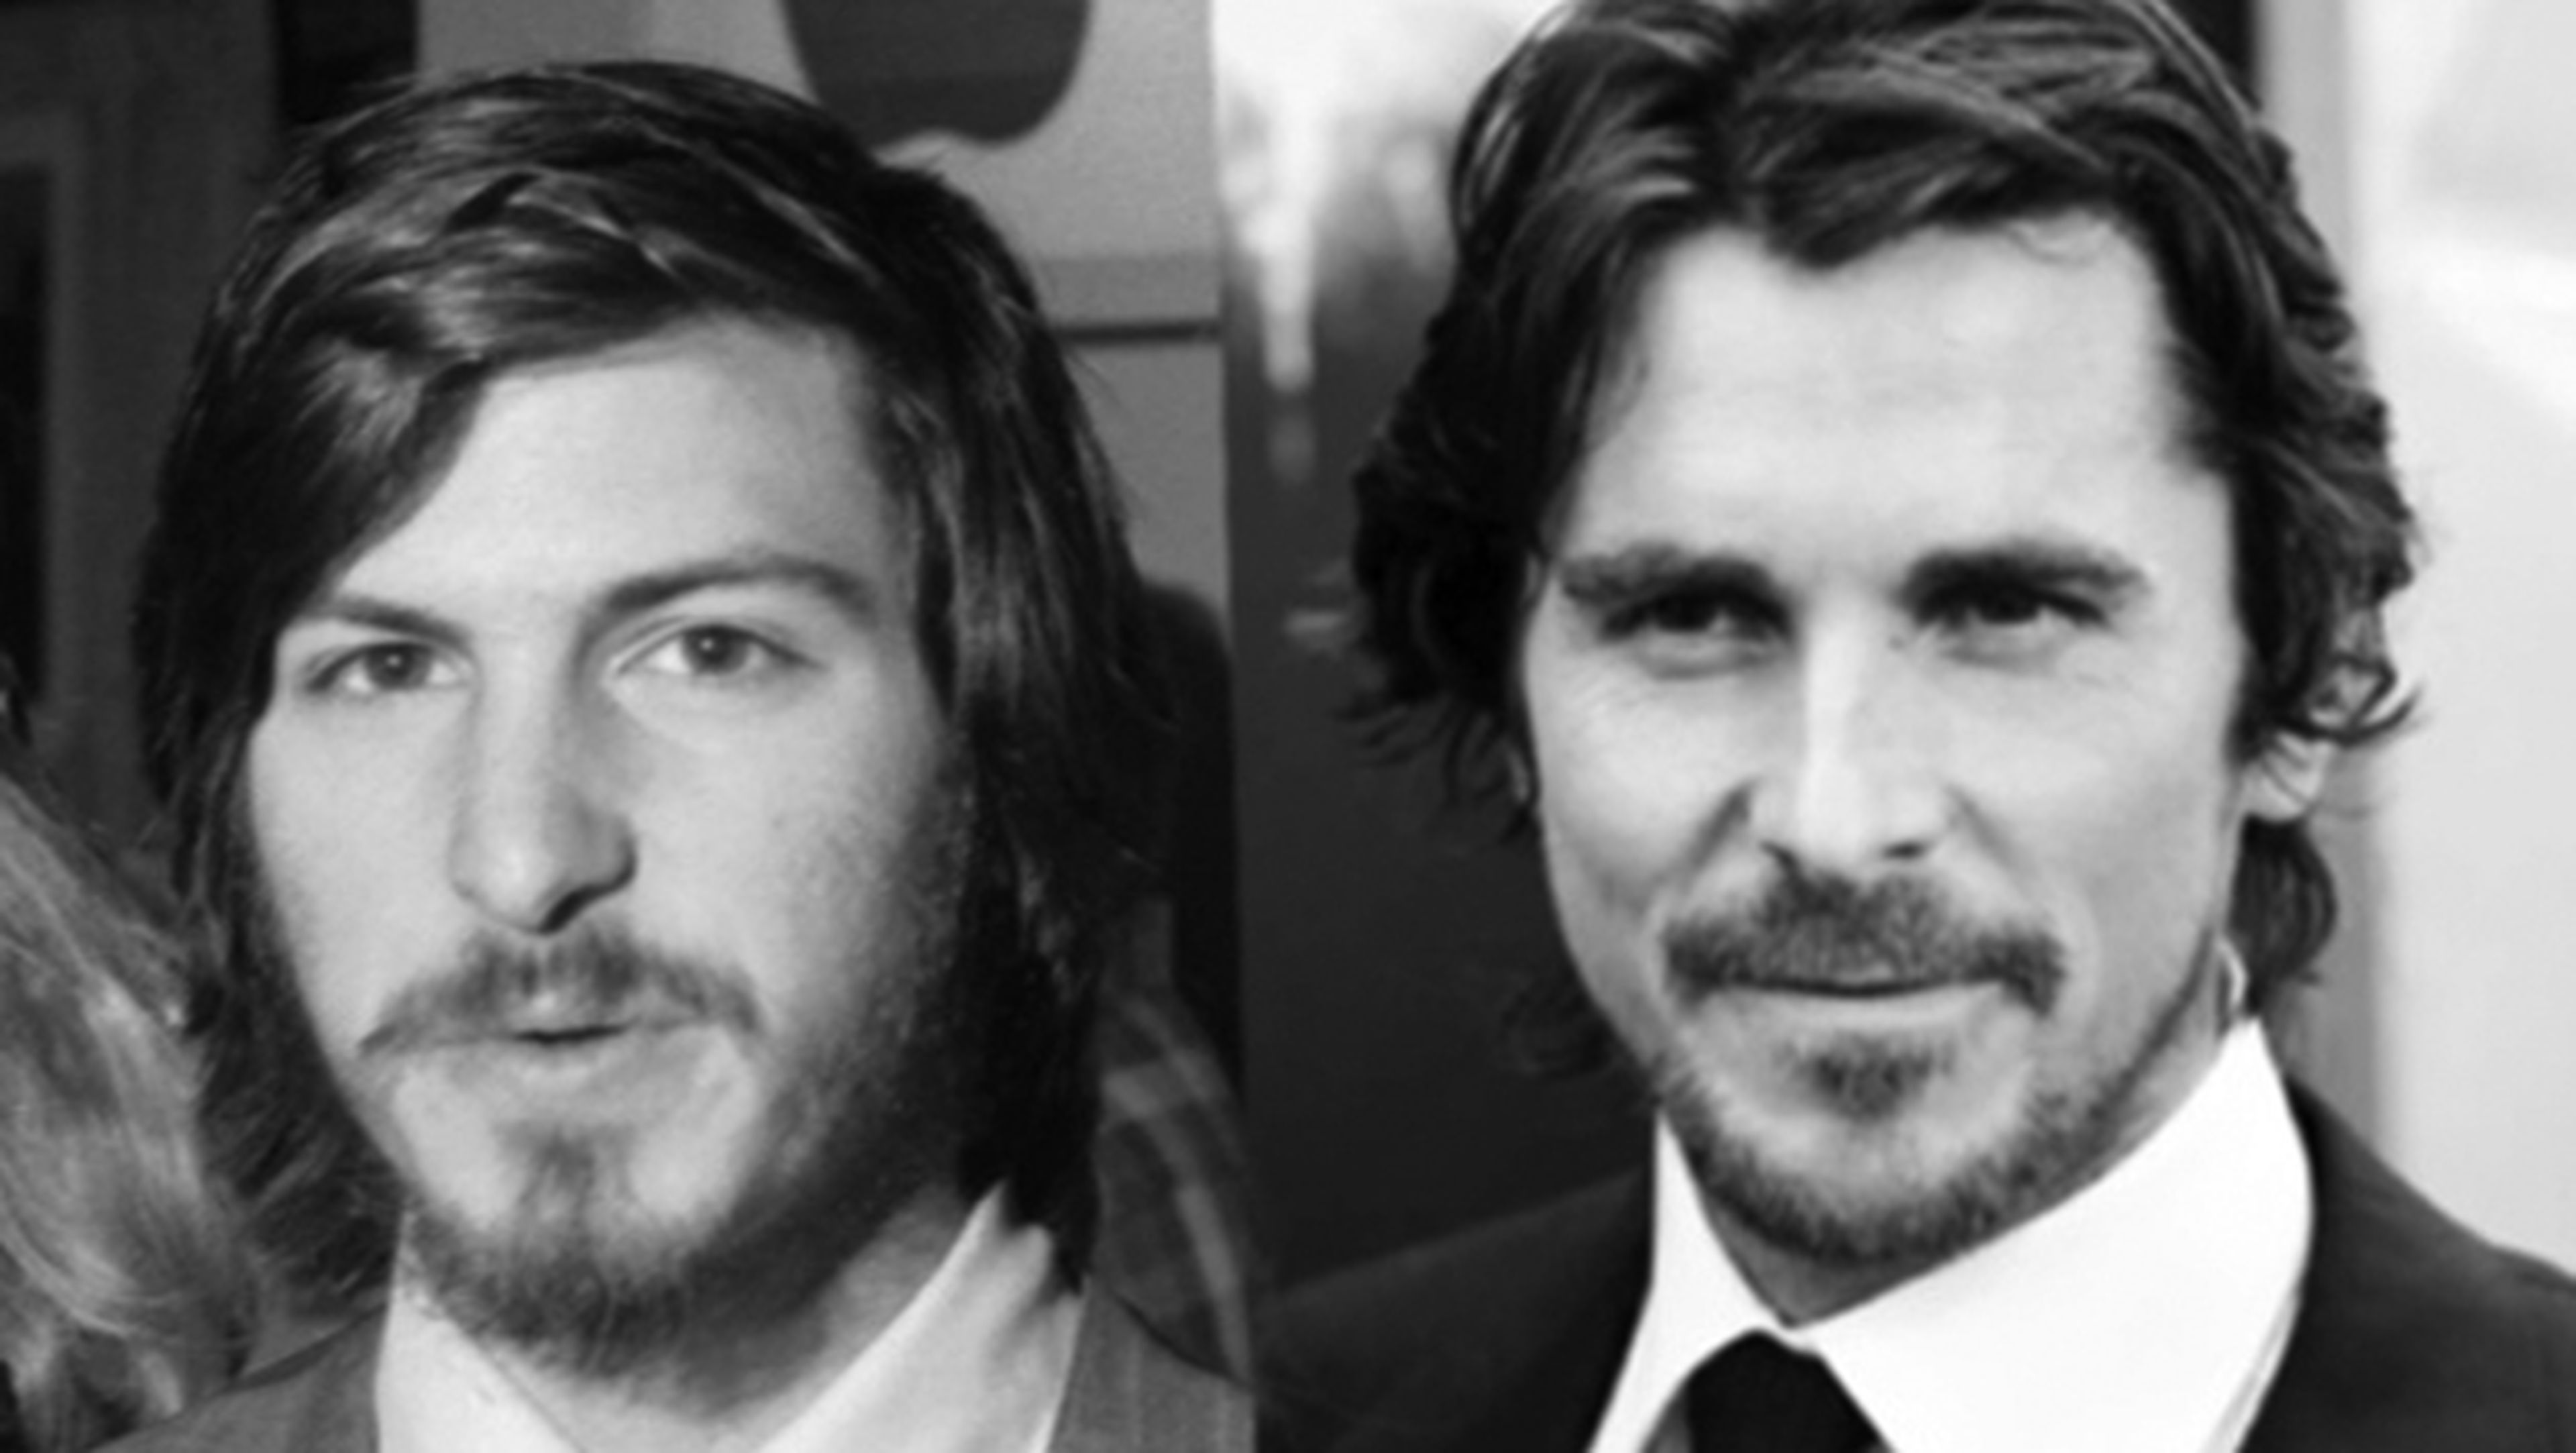 Christian Bale encarnará a Steve Jobs en su próxima película